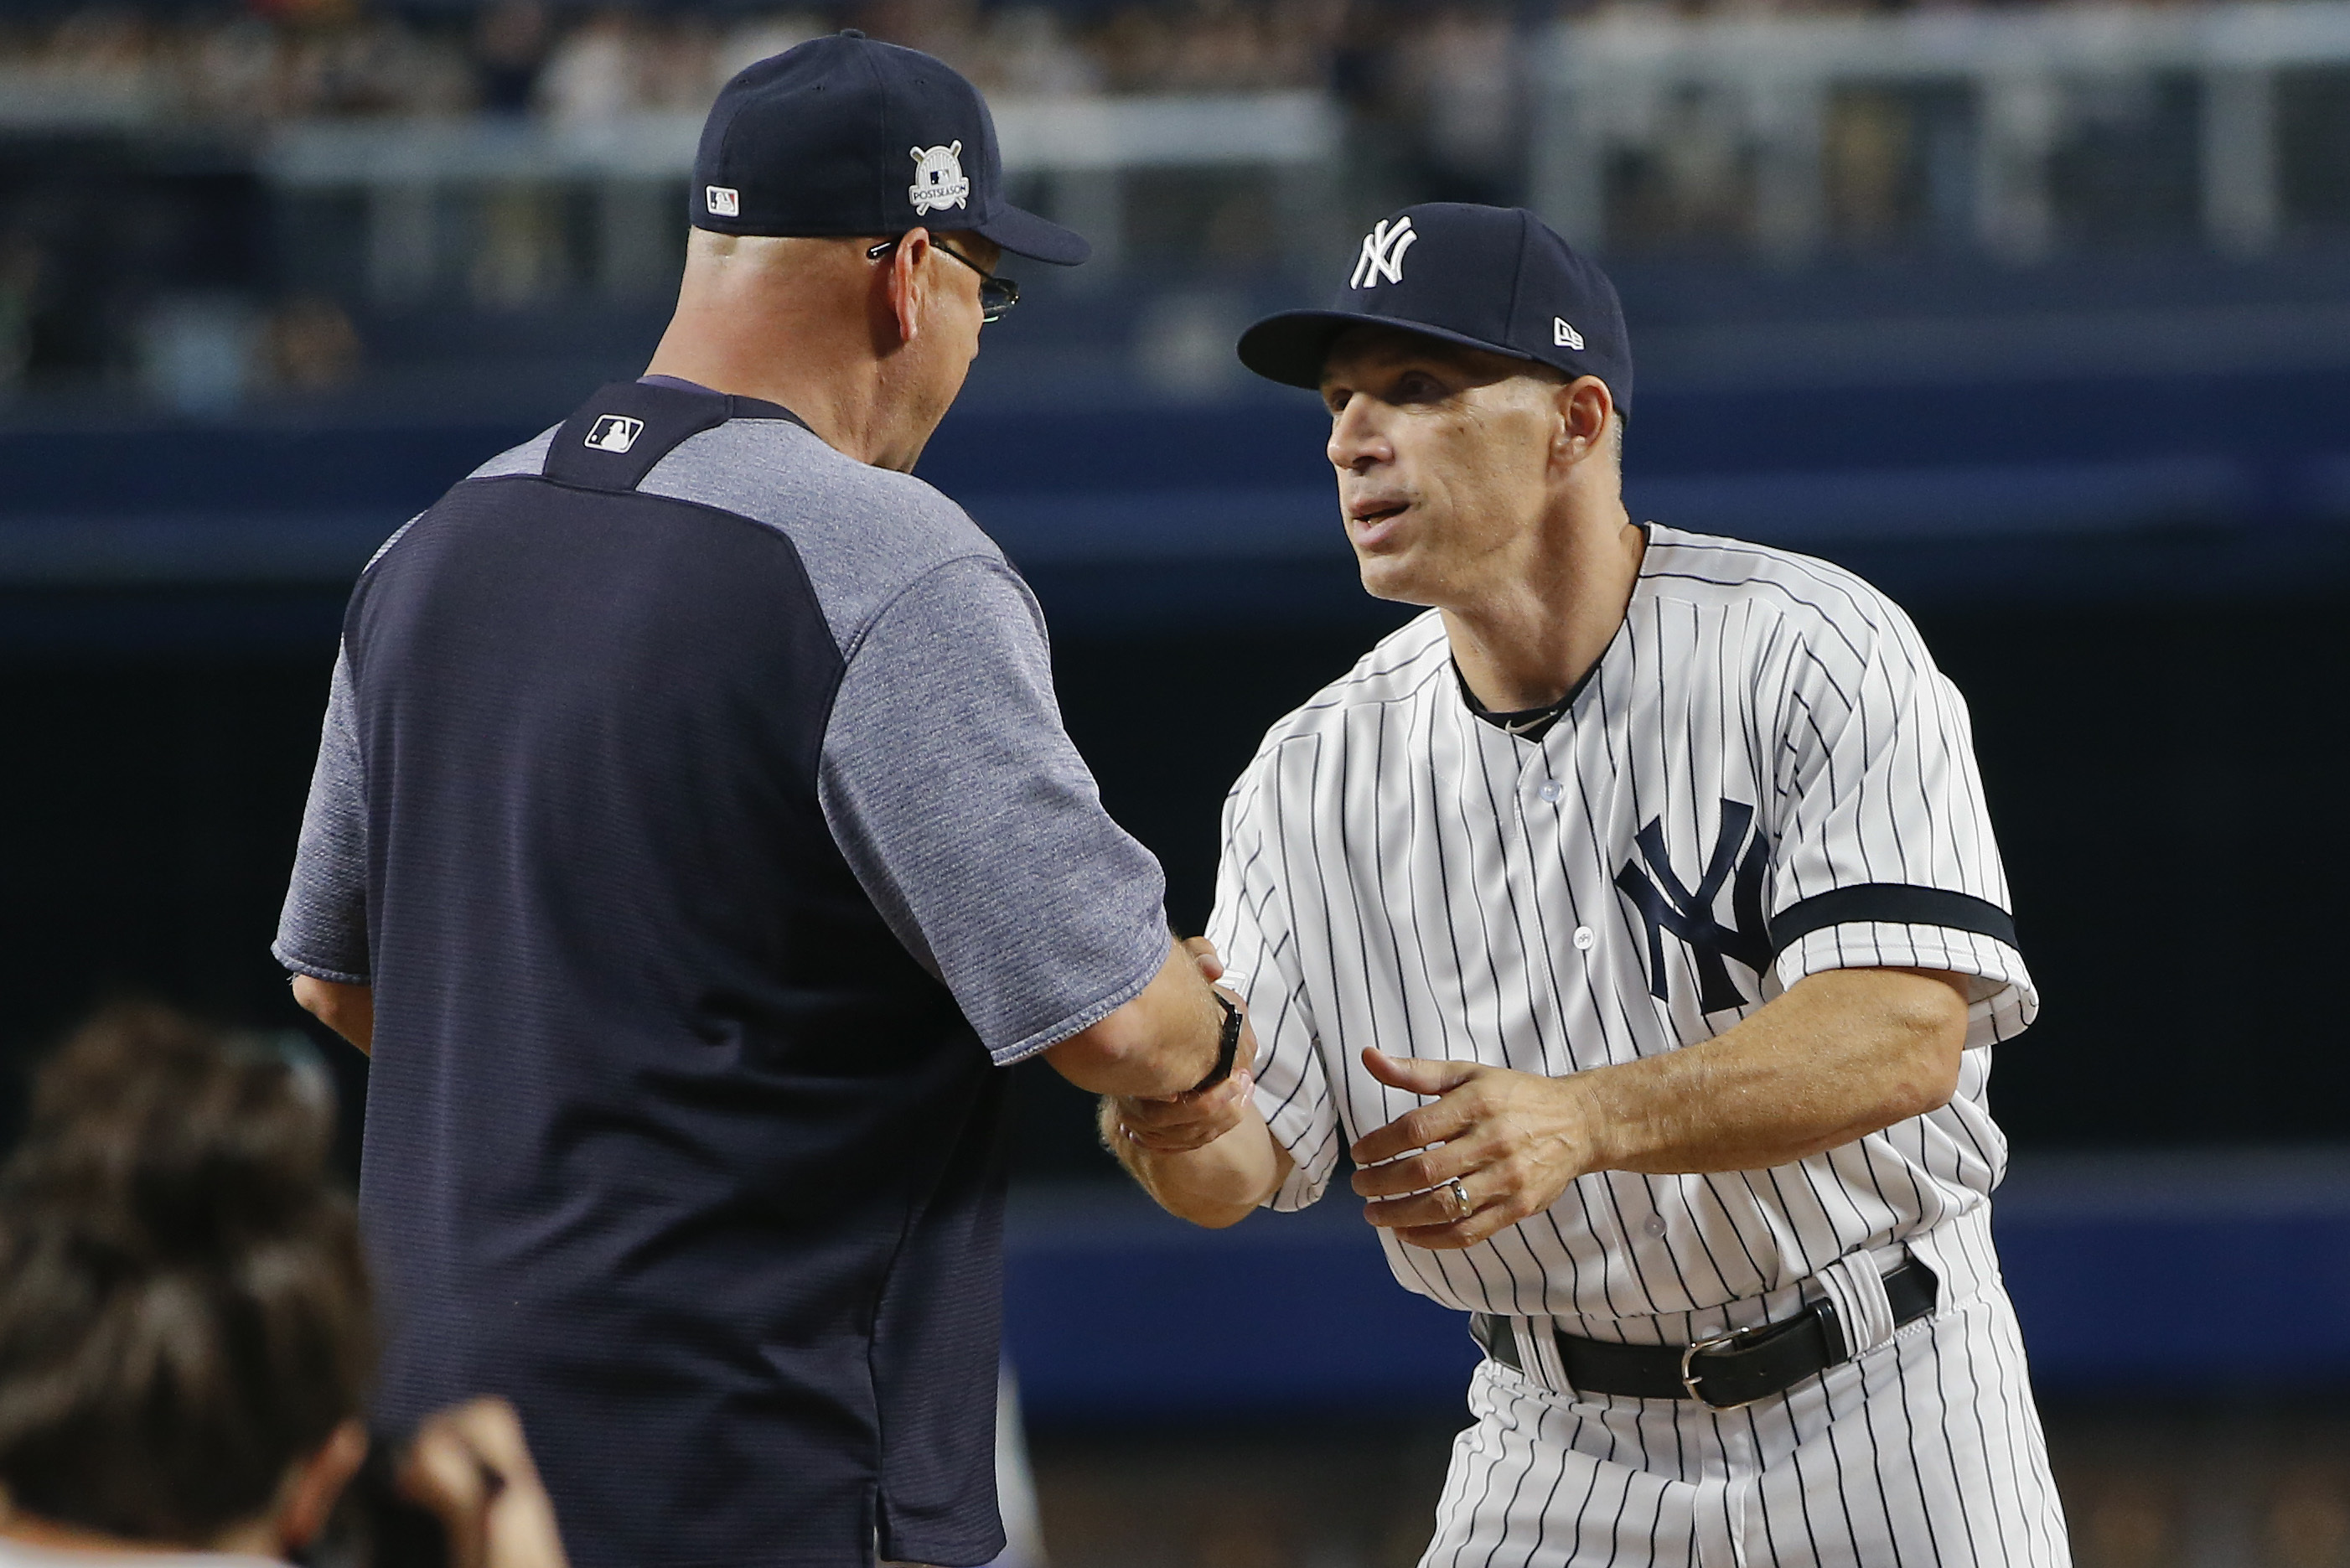 Joe Girardi not returning as New York Yankees manager, New York Yankees